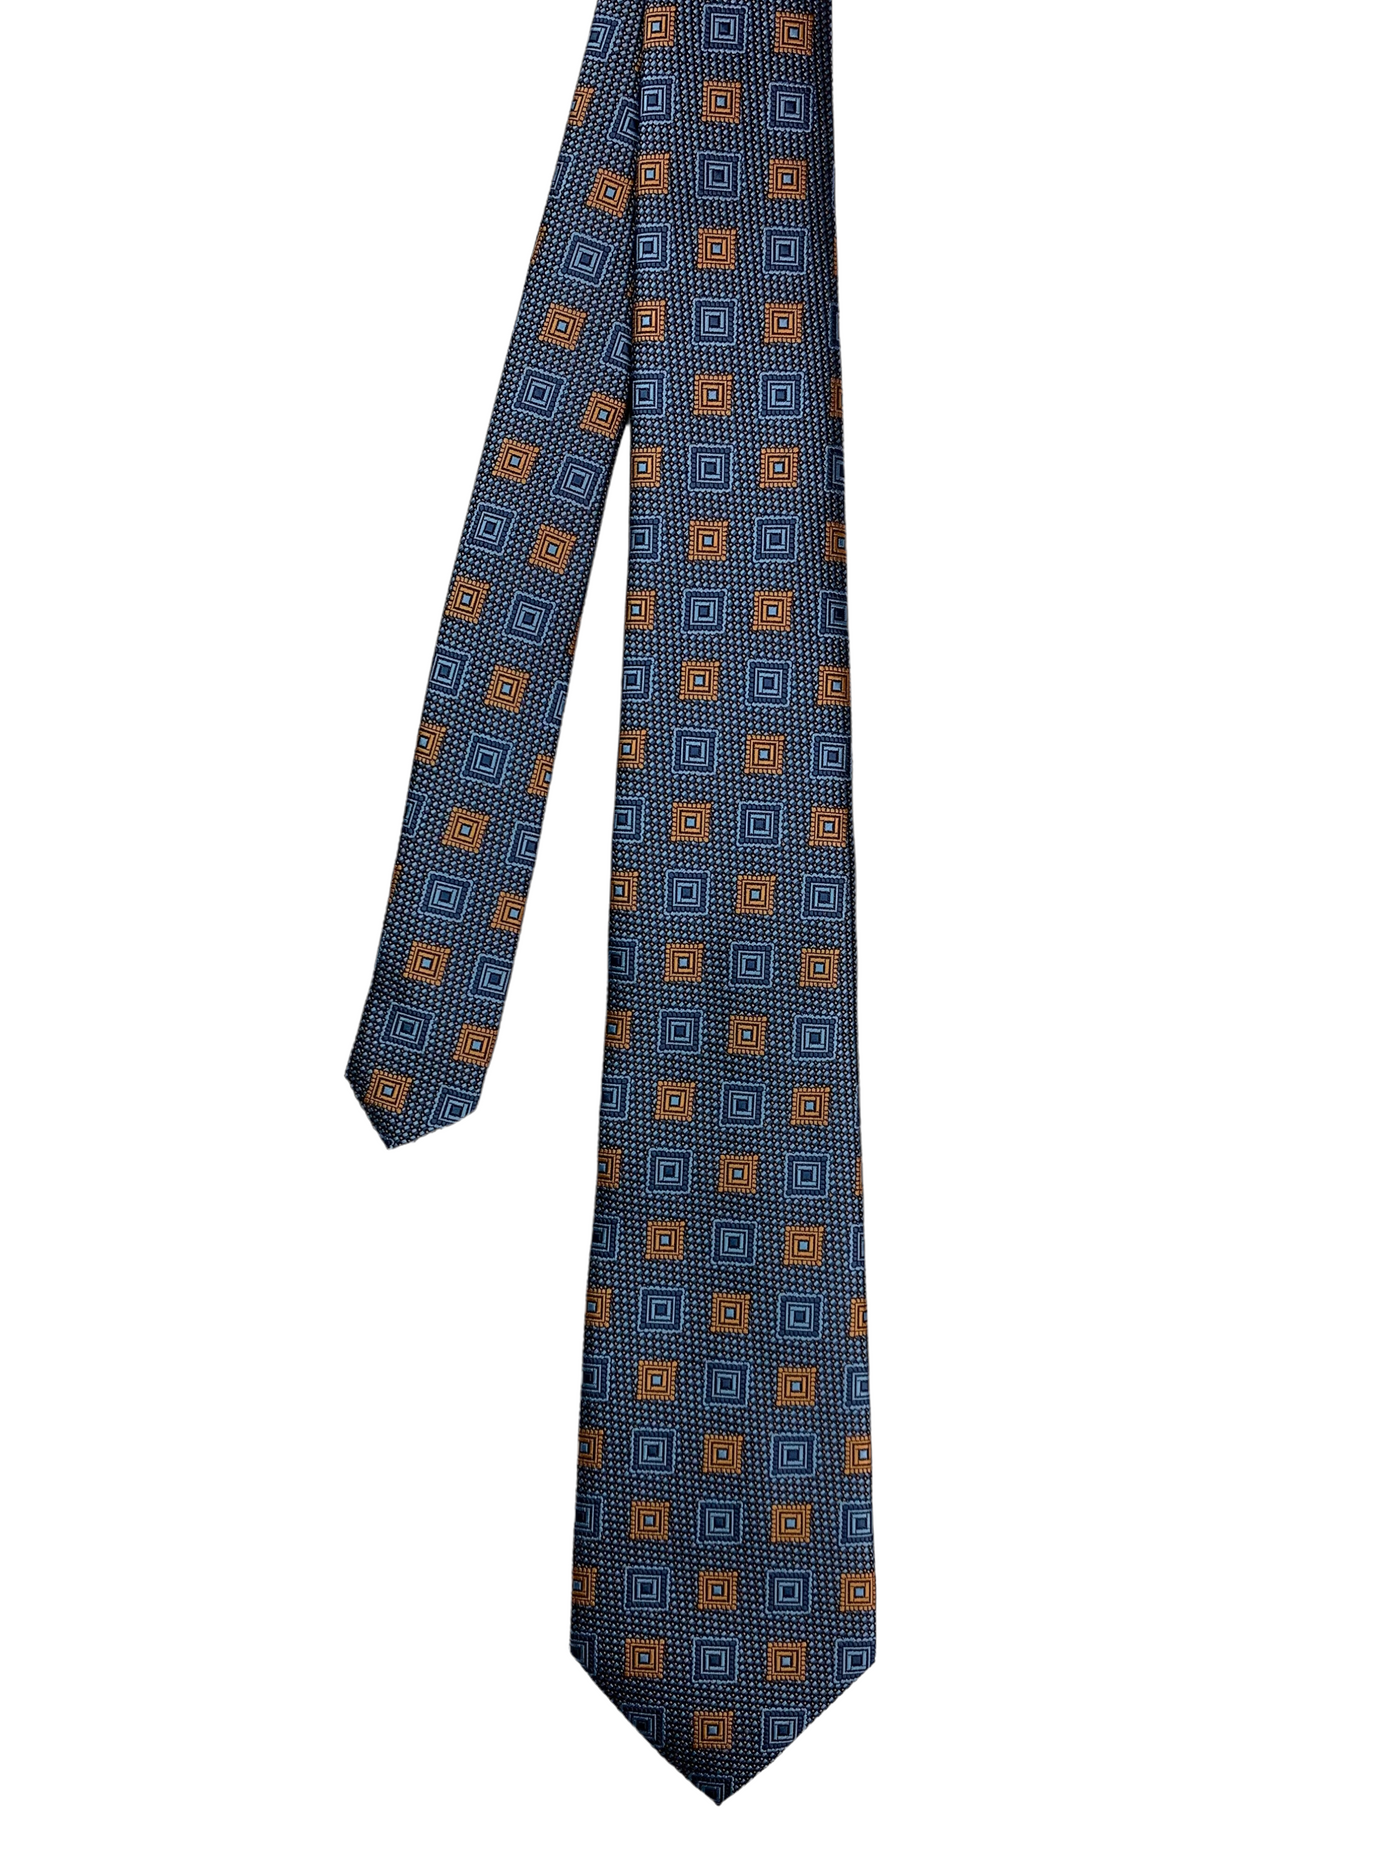 Cravate bleue à motif